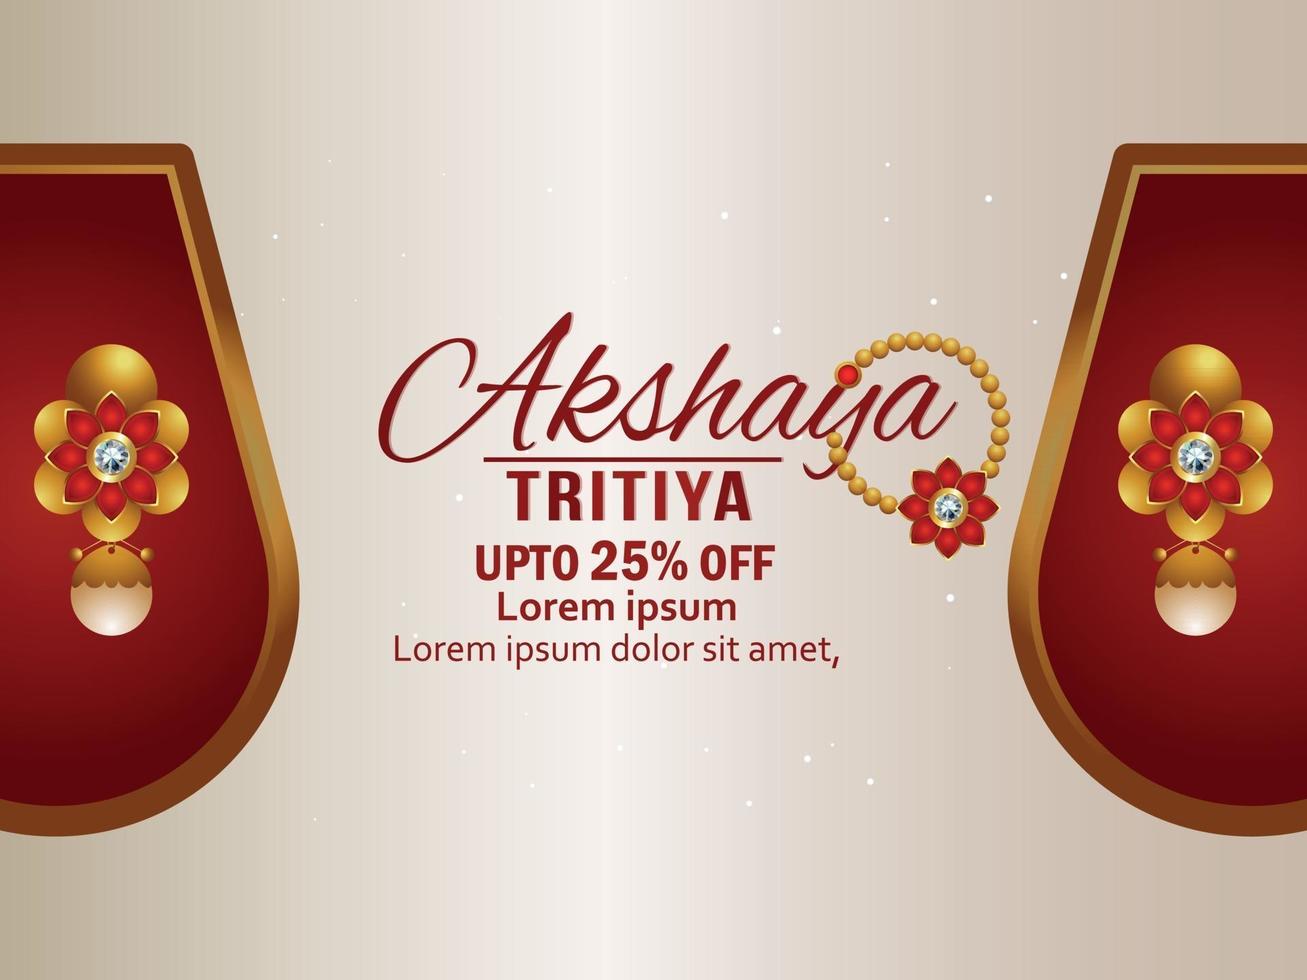 festival indiano akshaya tritiya com brincos de ouro vetor